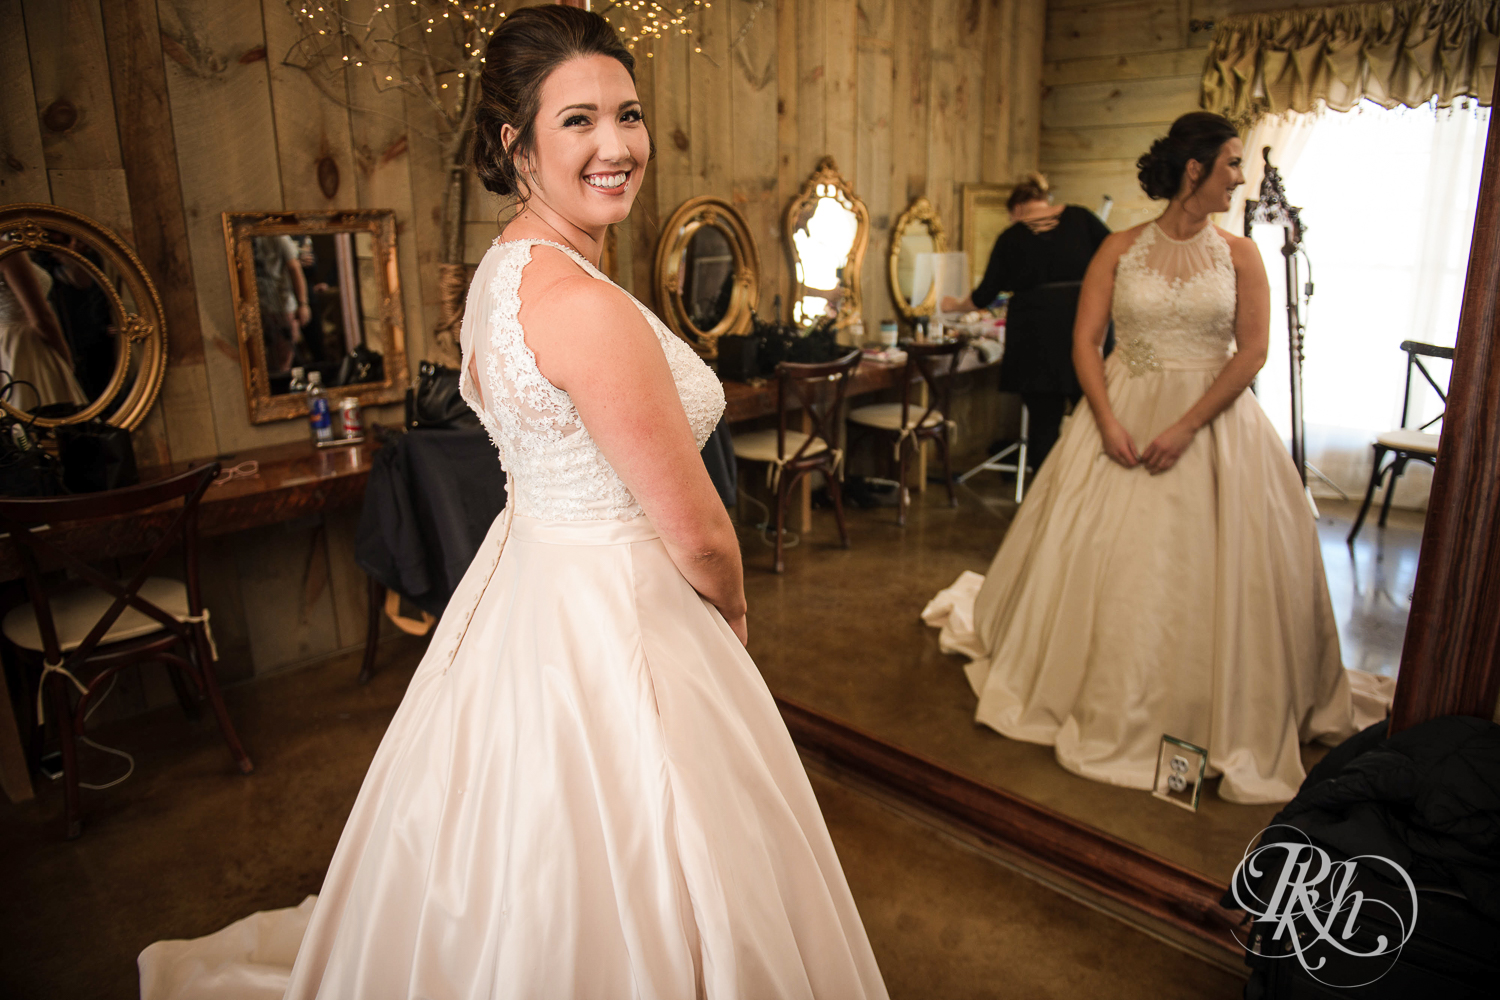 Bride gets into wedding dress before wedding at Creekside Farm in Rush City, Minnesota.